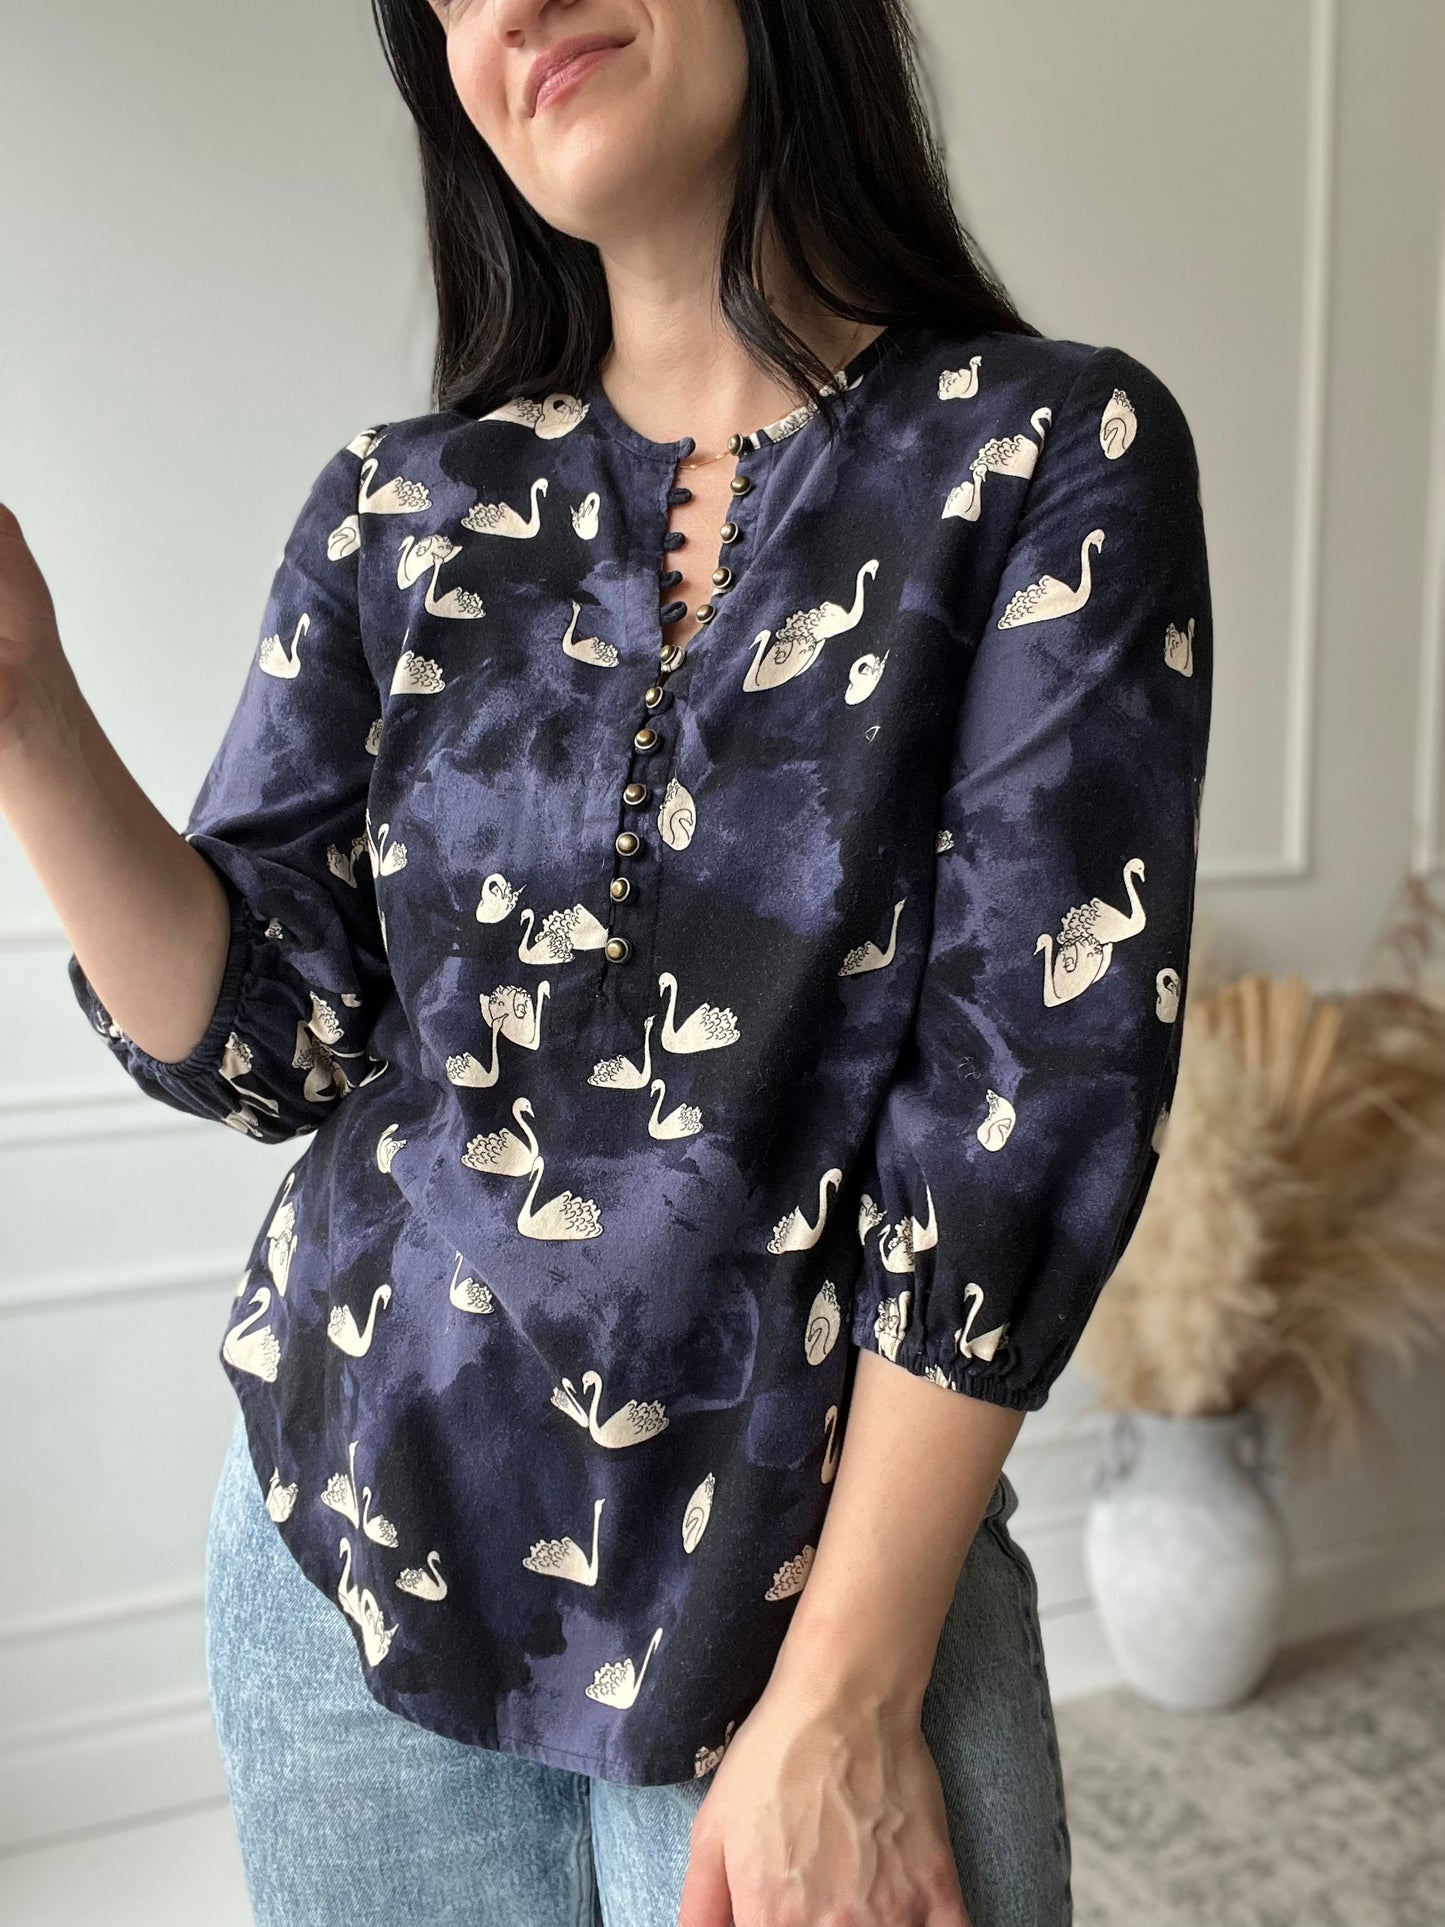 Bethesda Swan Flannel Shirt - Size M